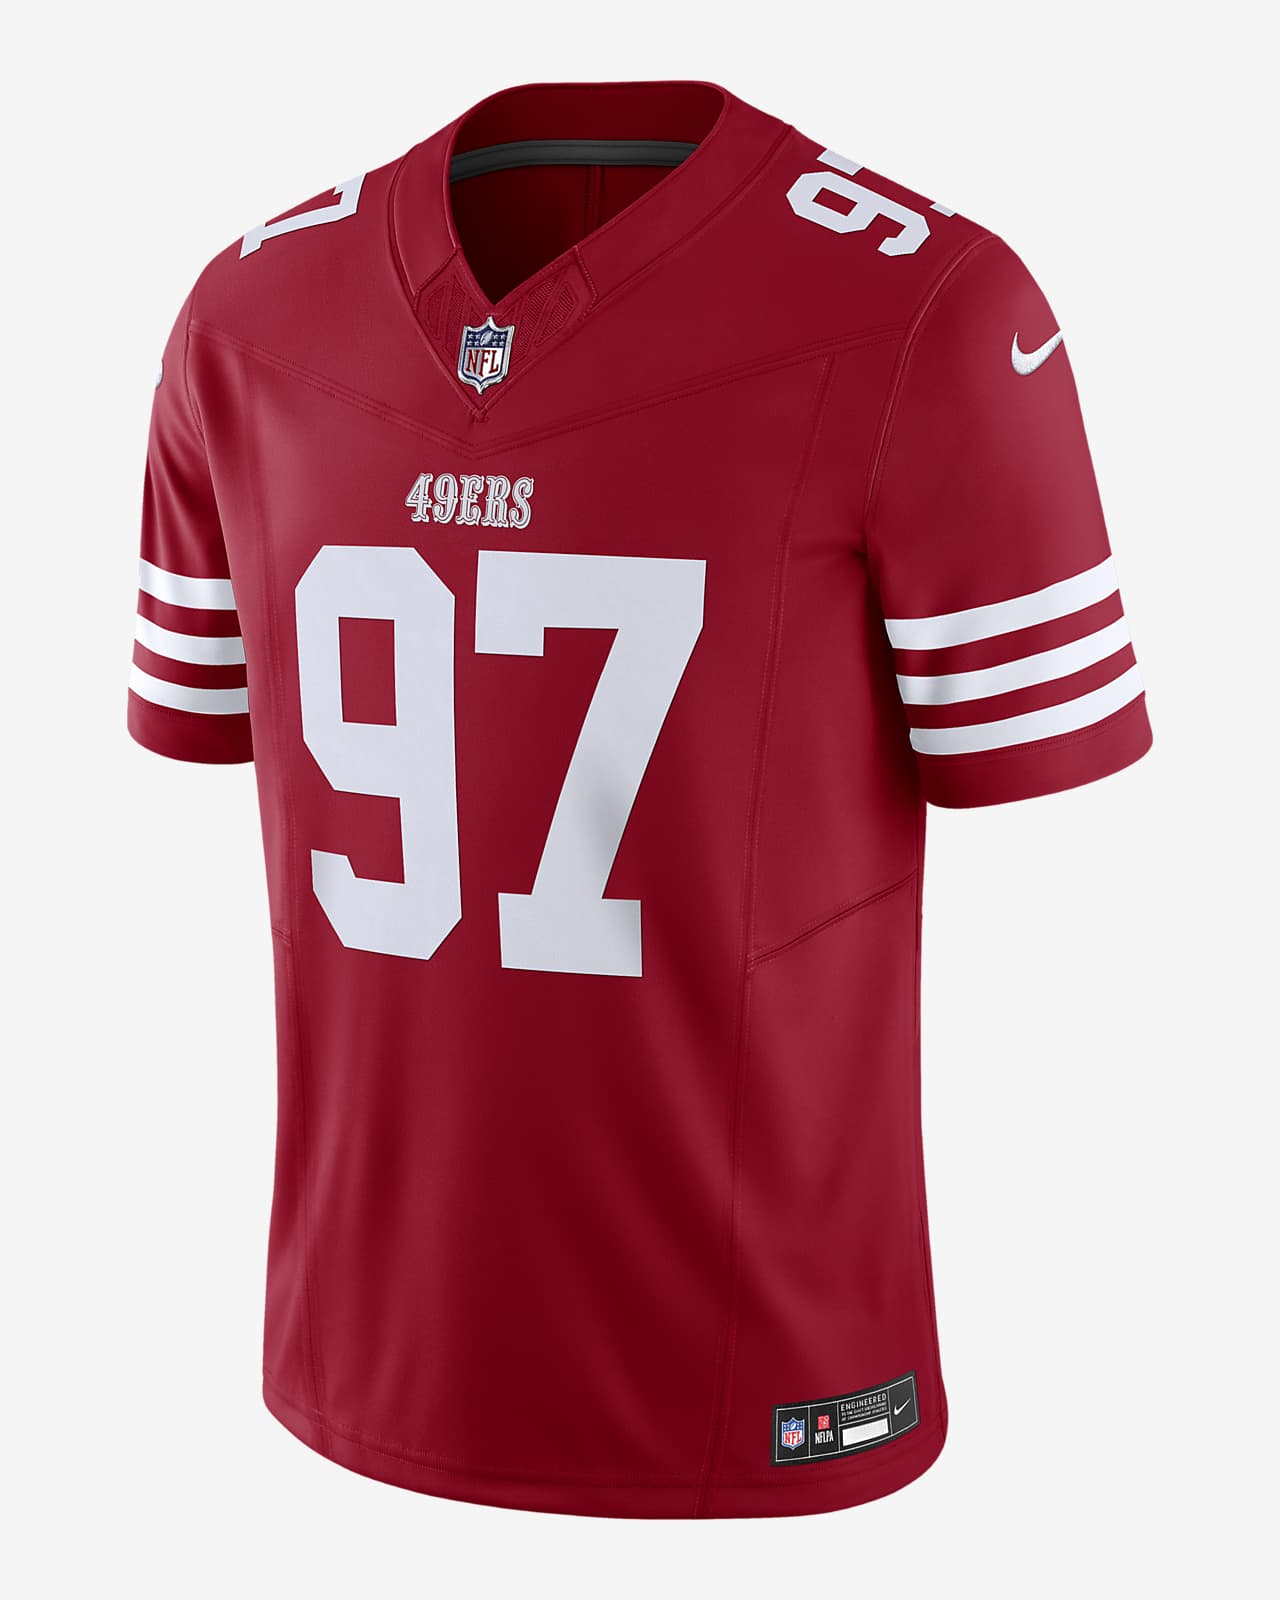 Jersey de fútbol americano Nike Dri-FIT de la NFL Limited para hombre Nick Bosa San Francisco 49ers